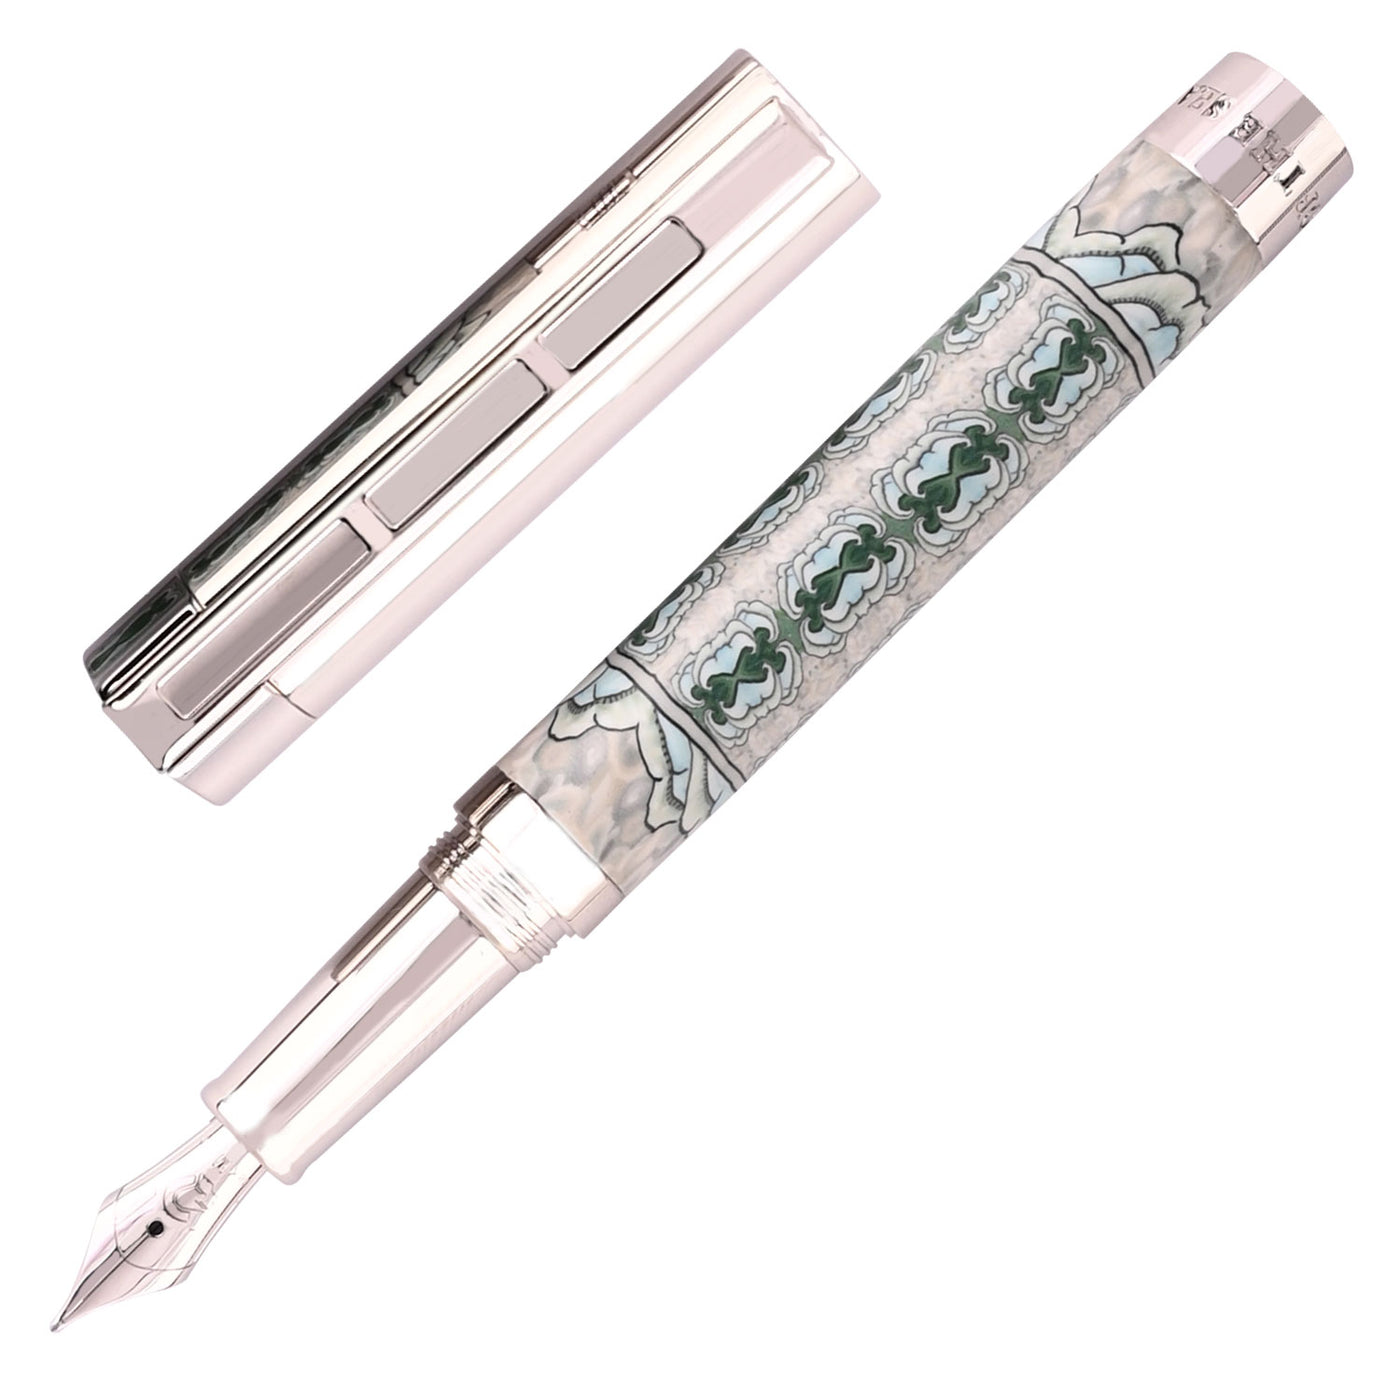 Staedtler Premium Pen of the Season Fountain Pen - Winter 2016 (Limited Edition) 1